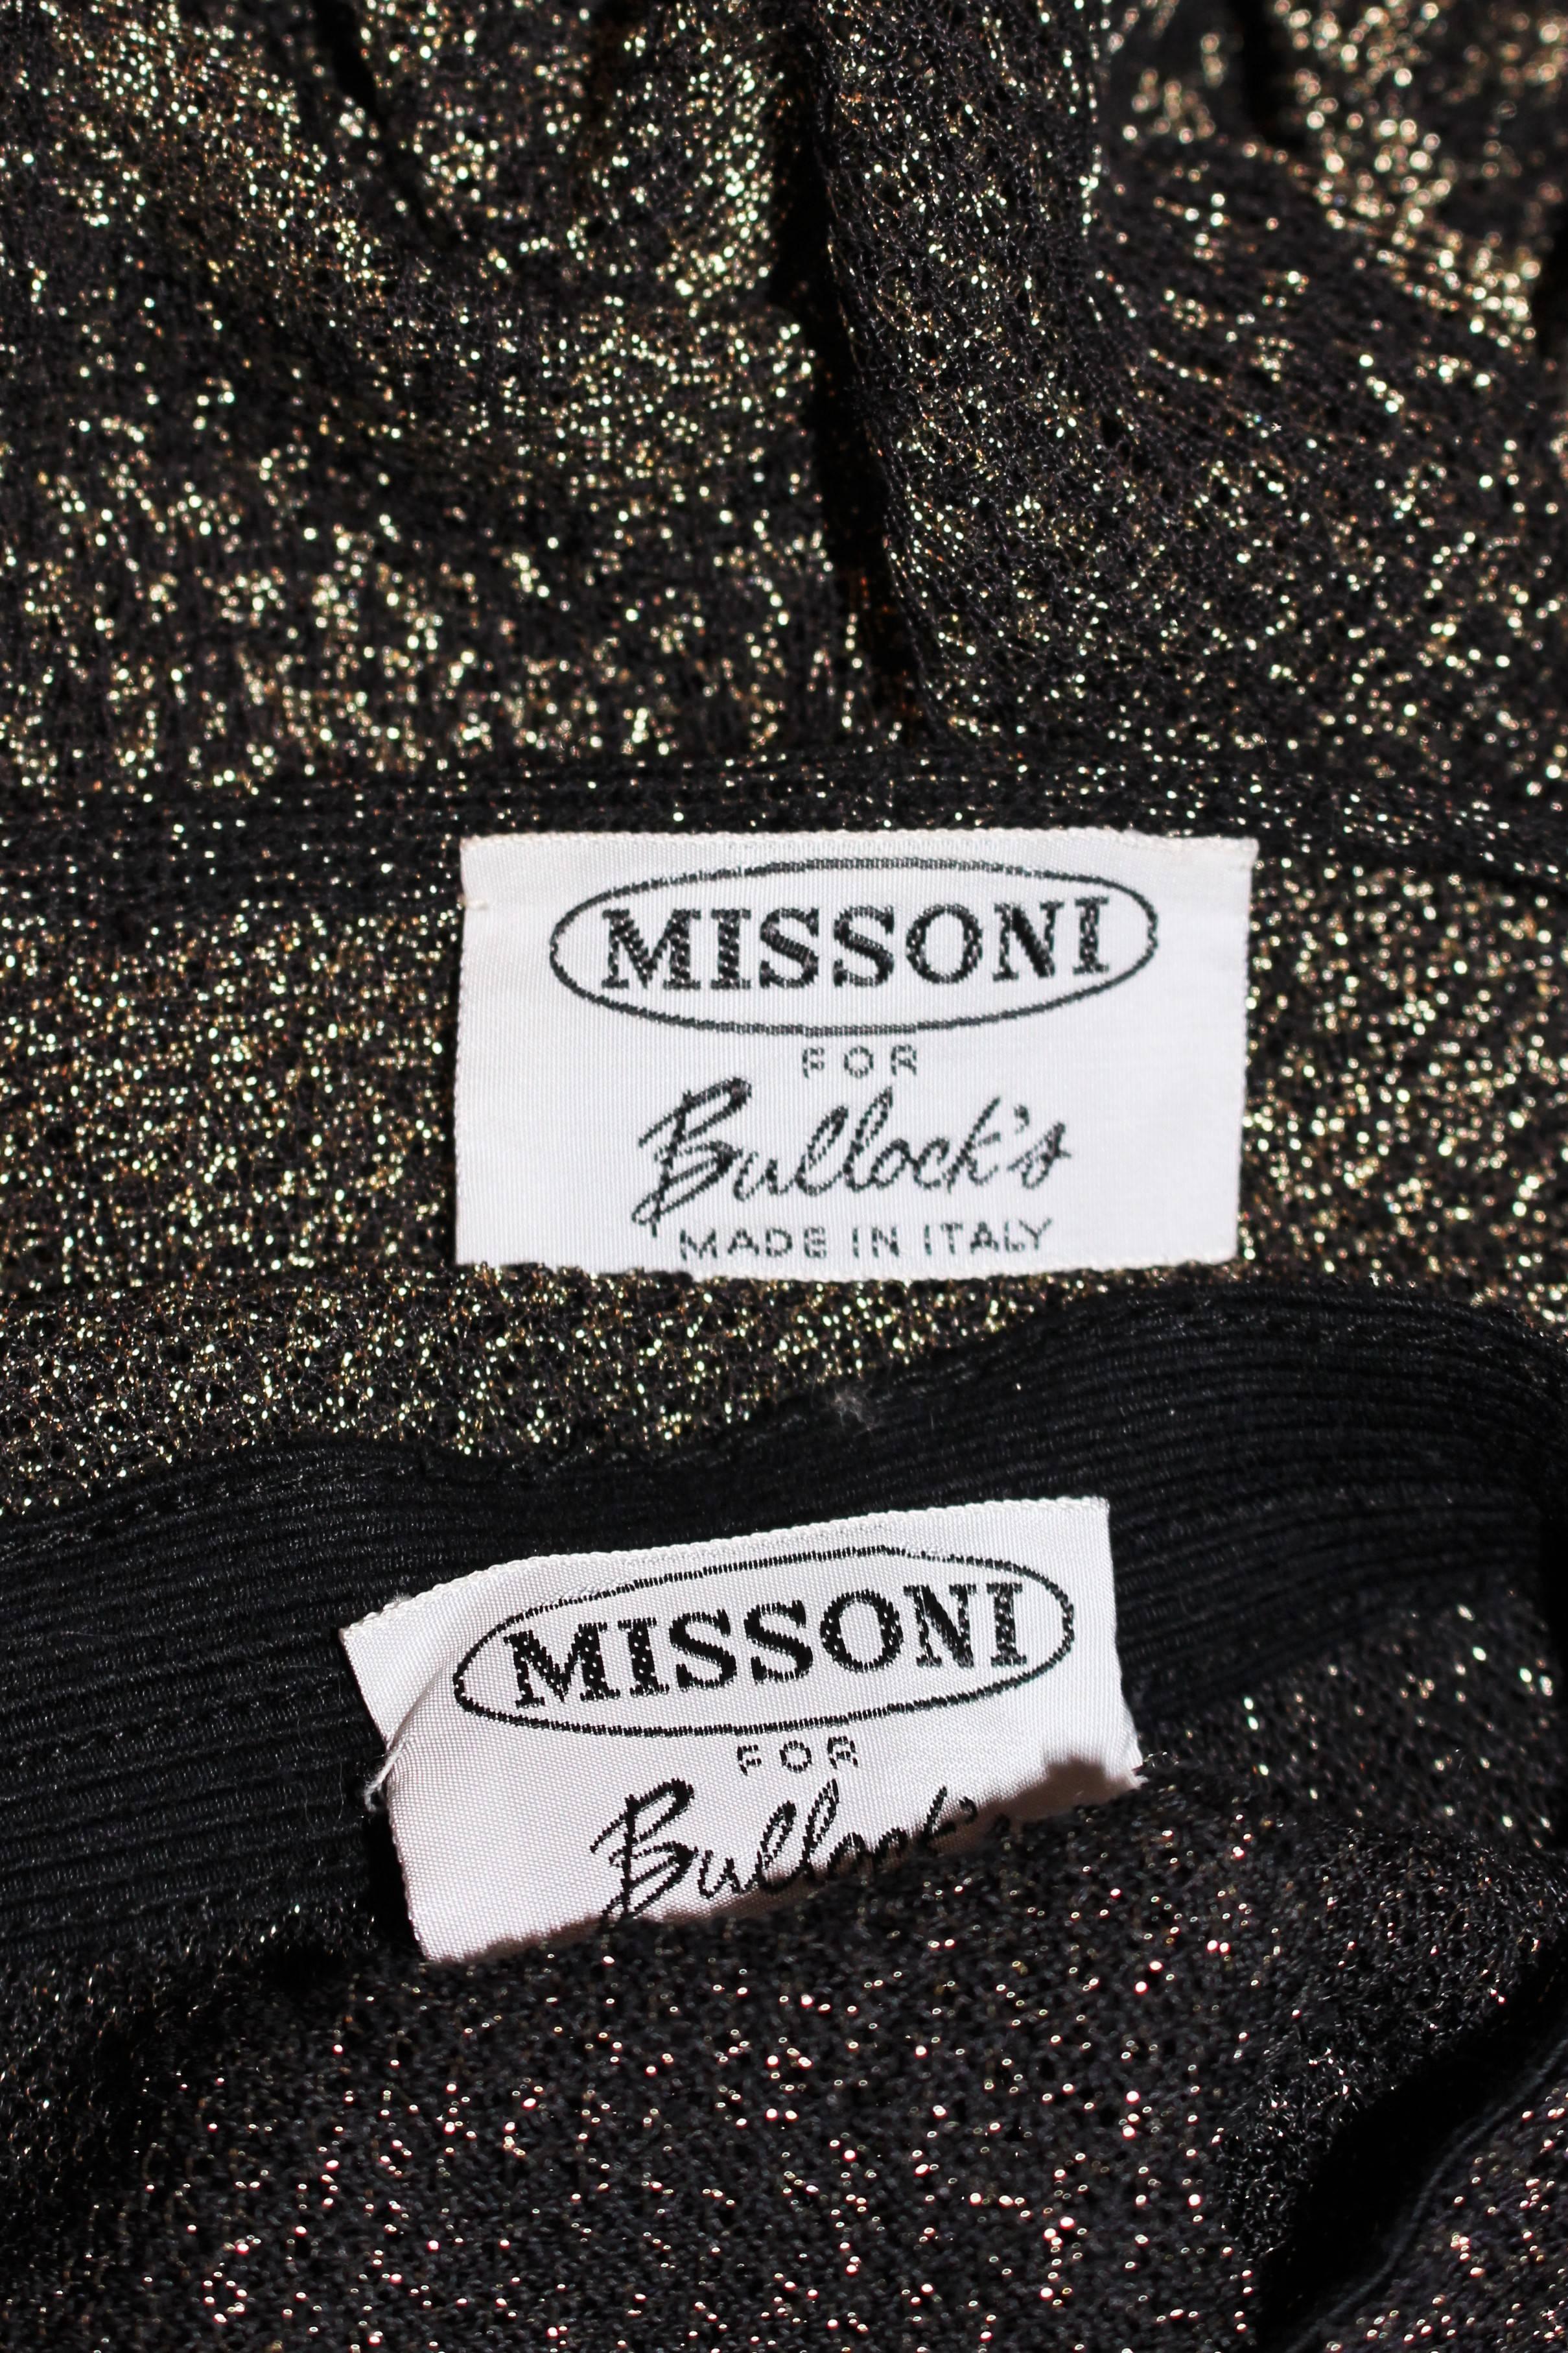 MISSONI Black and Gold Floral Metallic Knit Pant Set Size Size Medium Large 46 For Sale 5